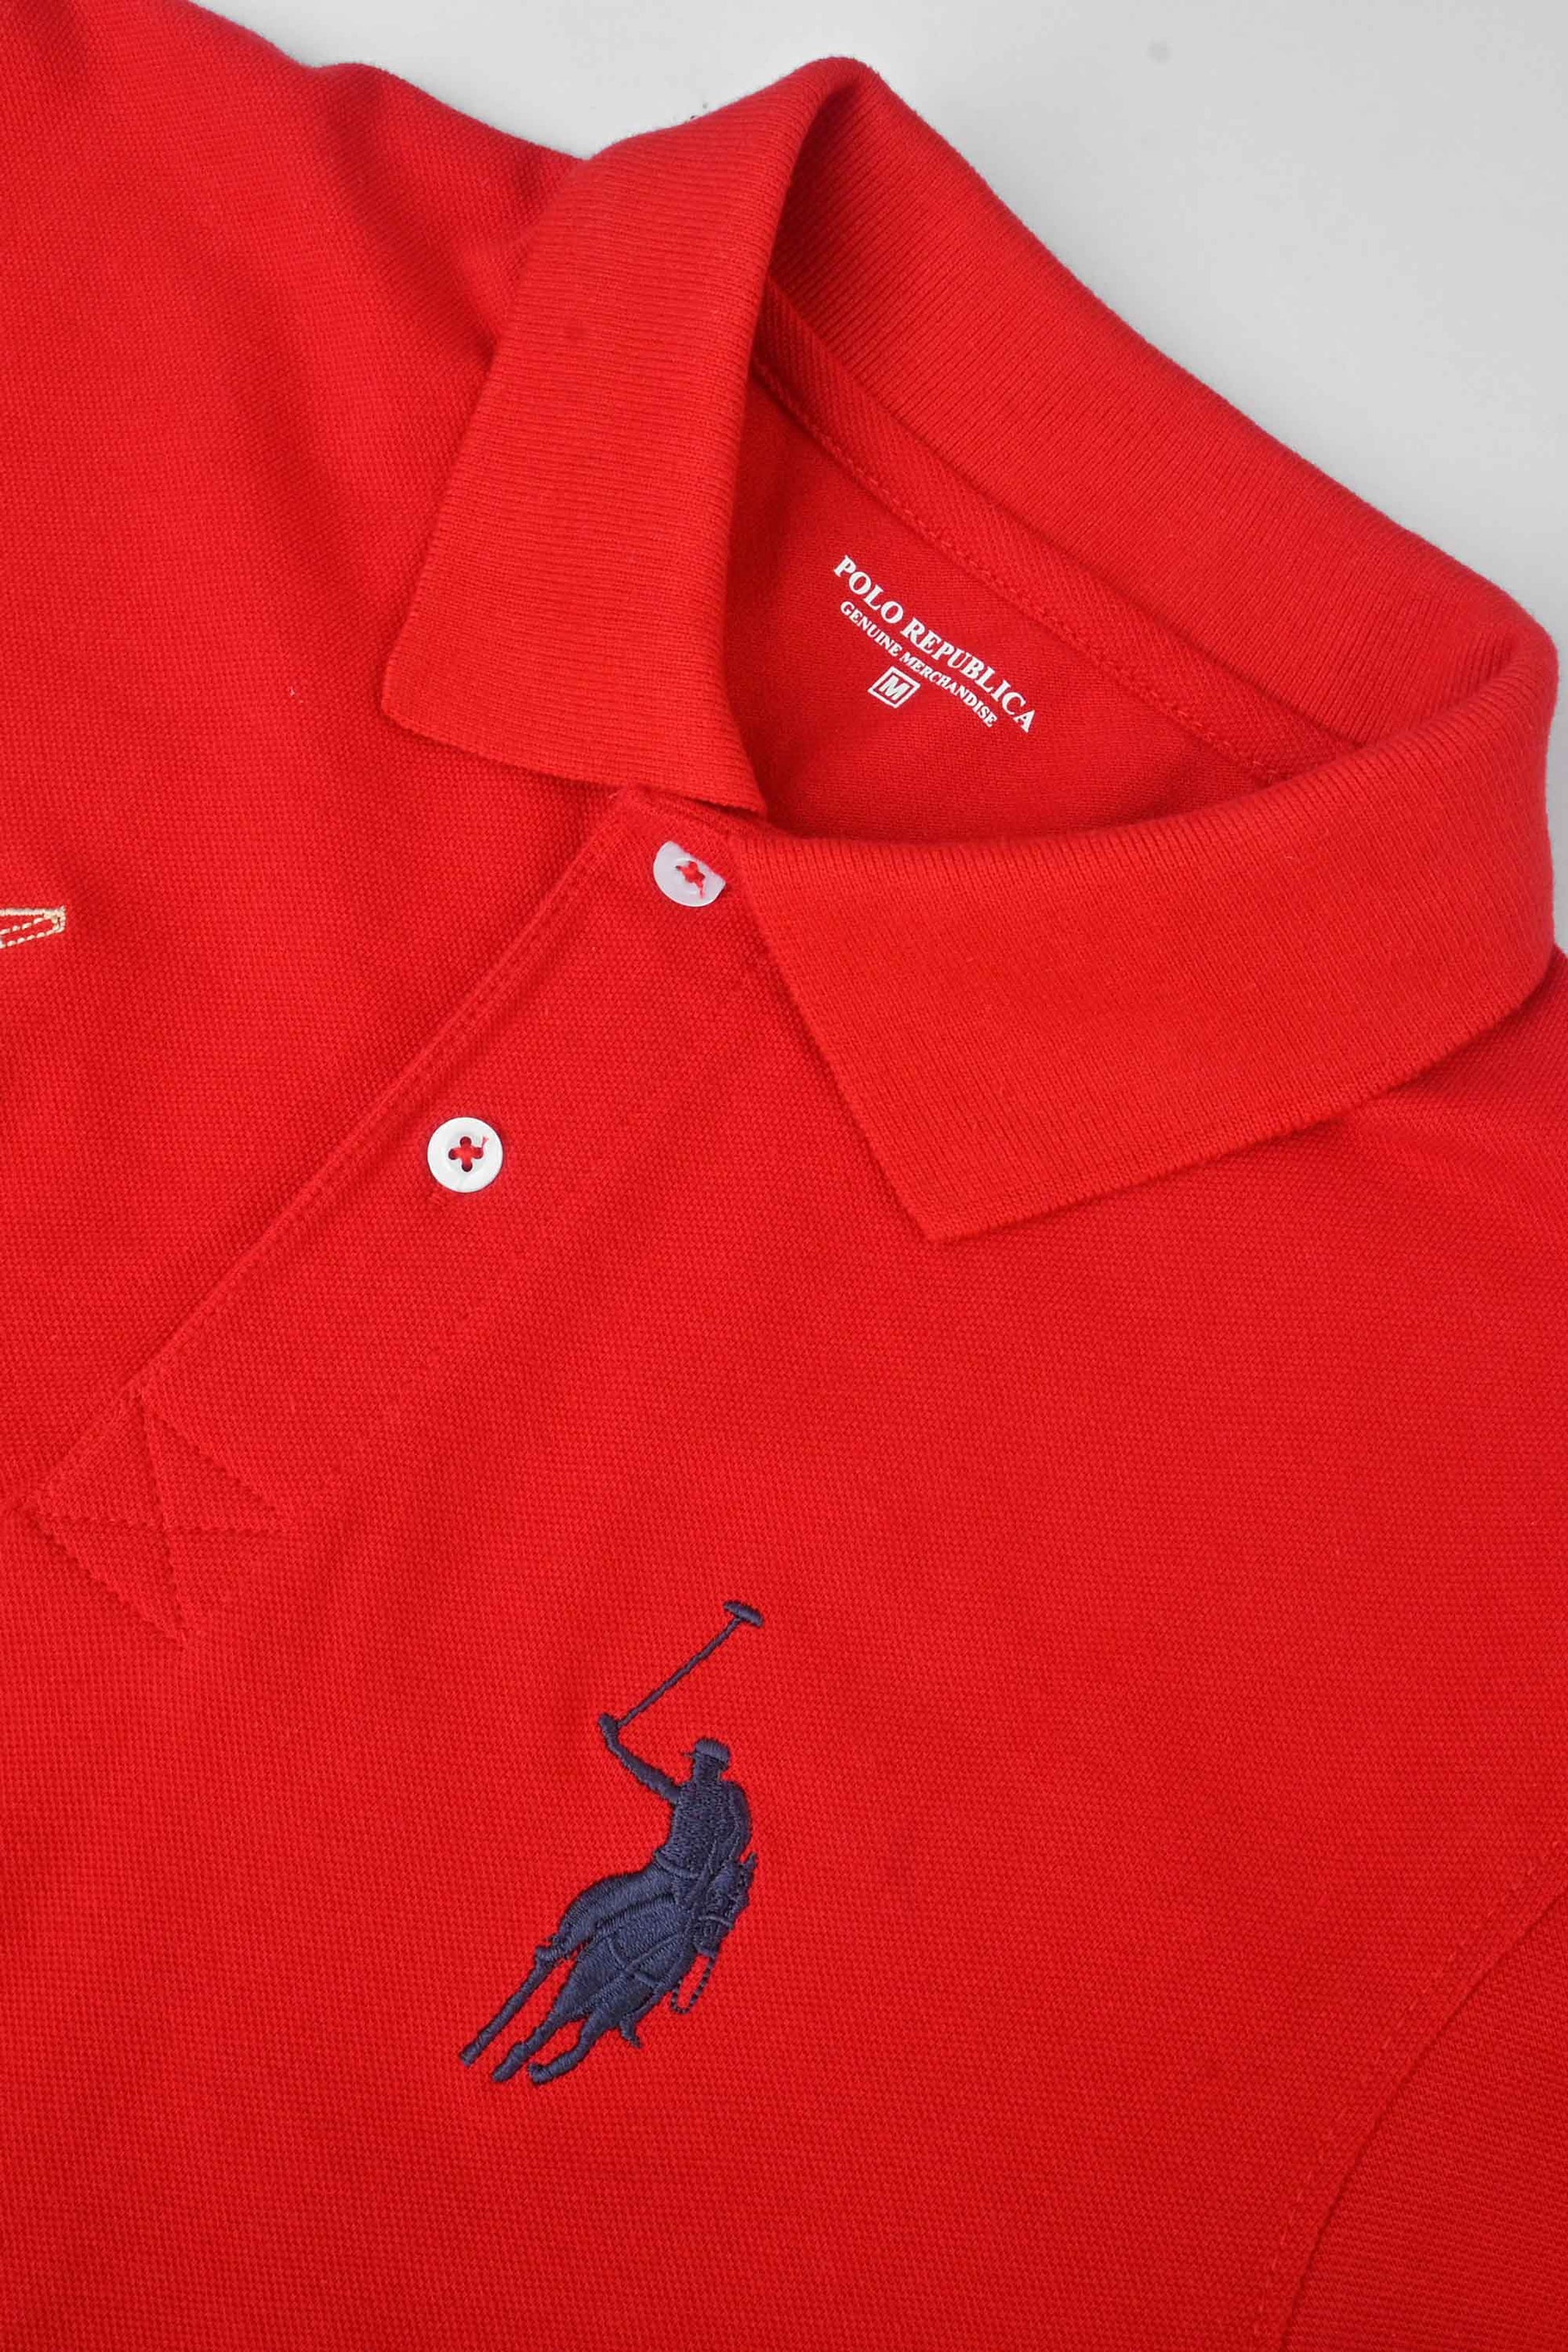 Polo Republica Men's Signature Pony And LV Crest Embroidered Polo Shirt Men's Polo Shirt Polo Republica 